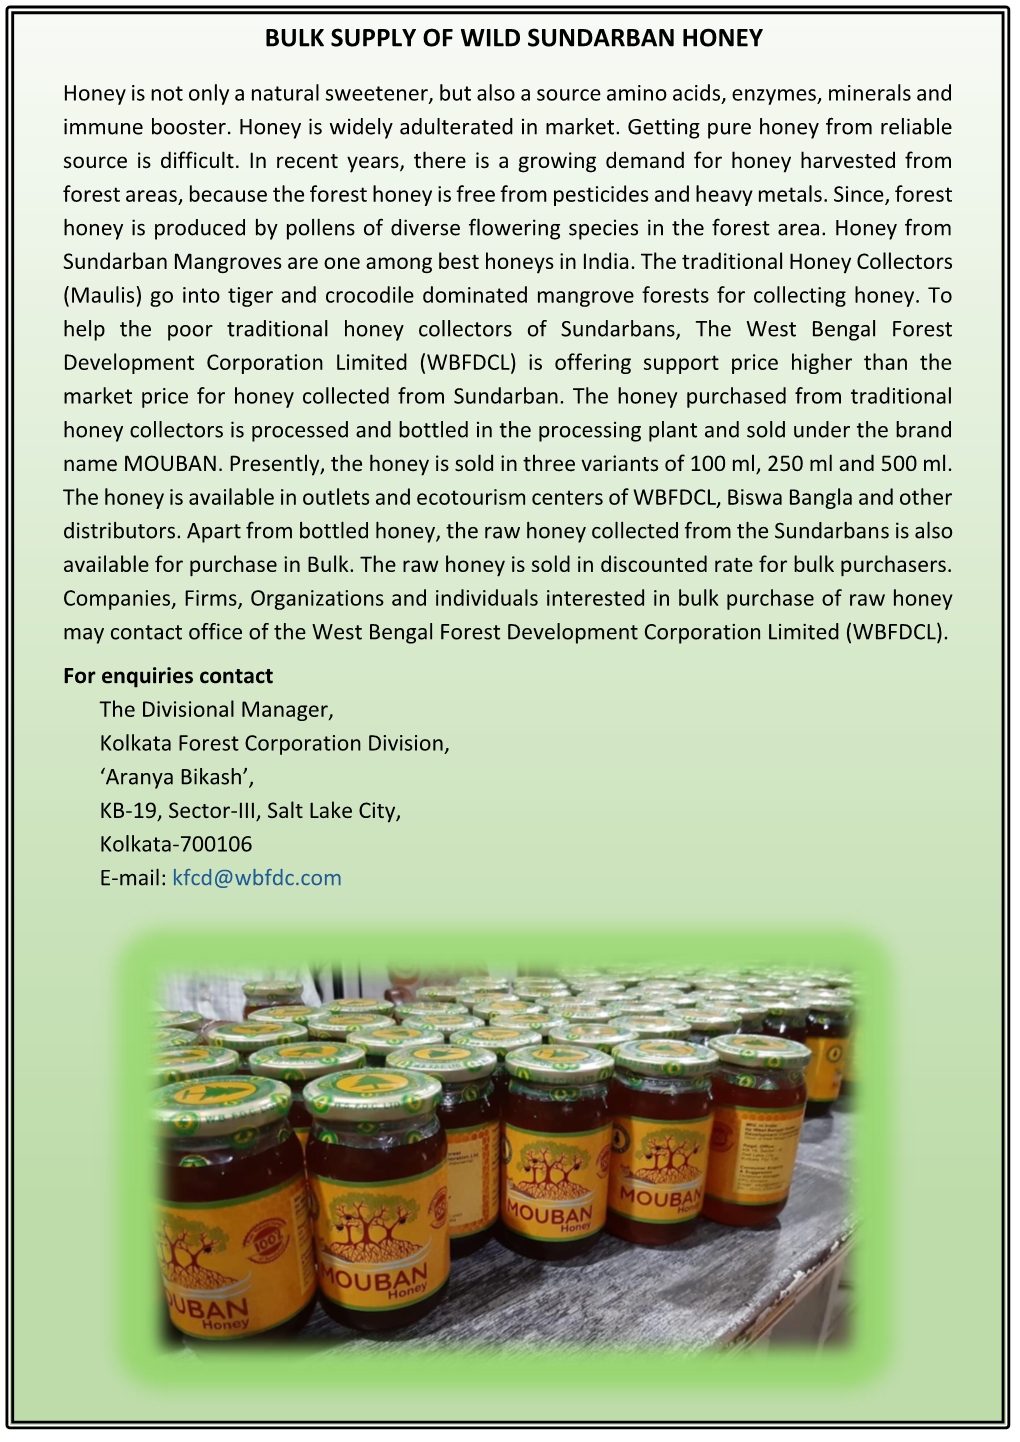 Bulk Supply of Wild Sundarban Honey